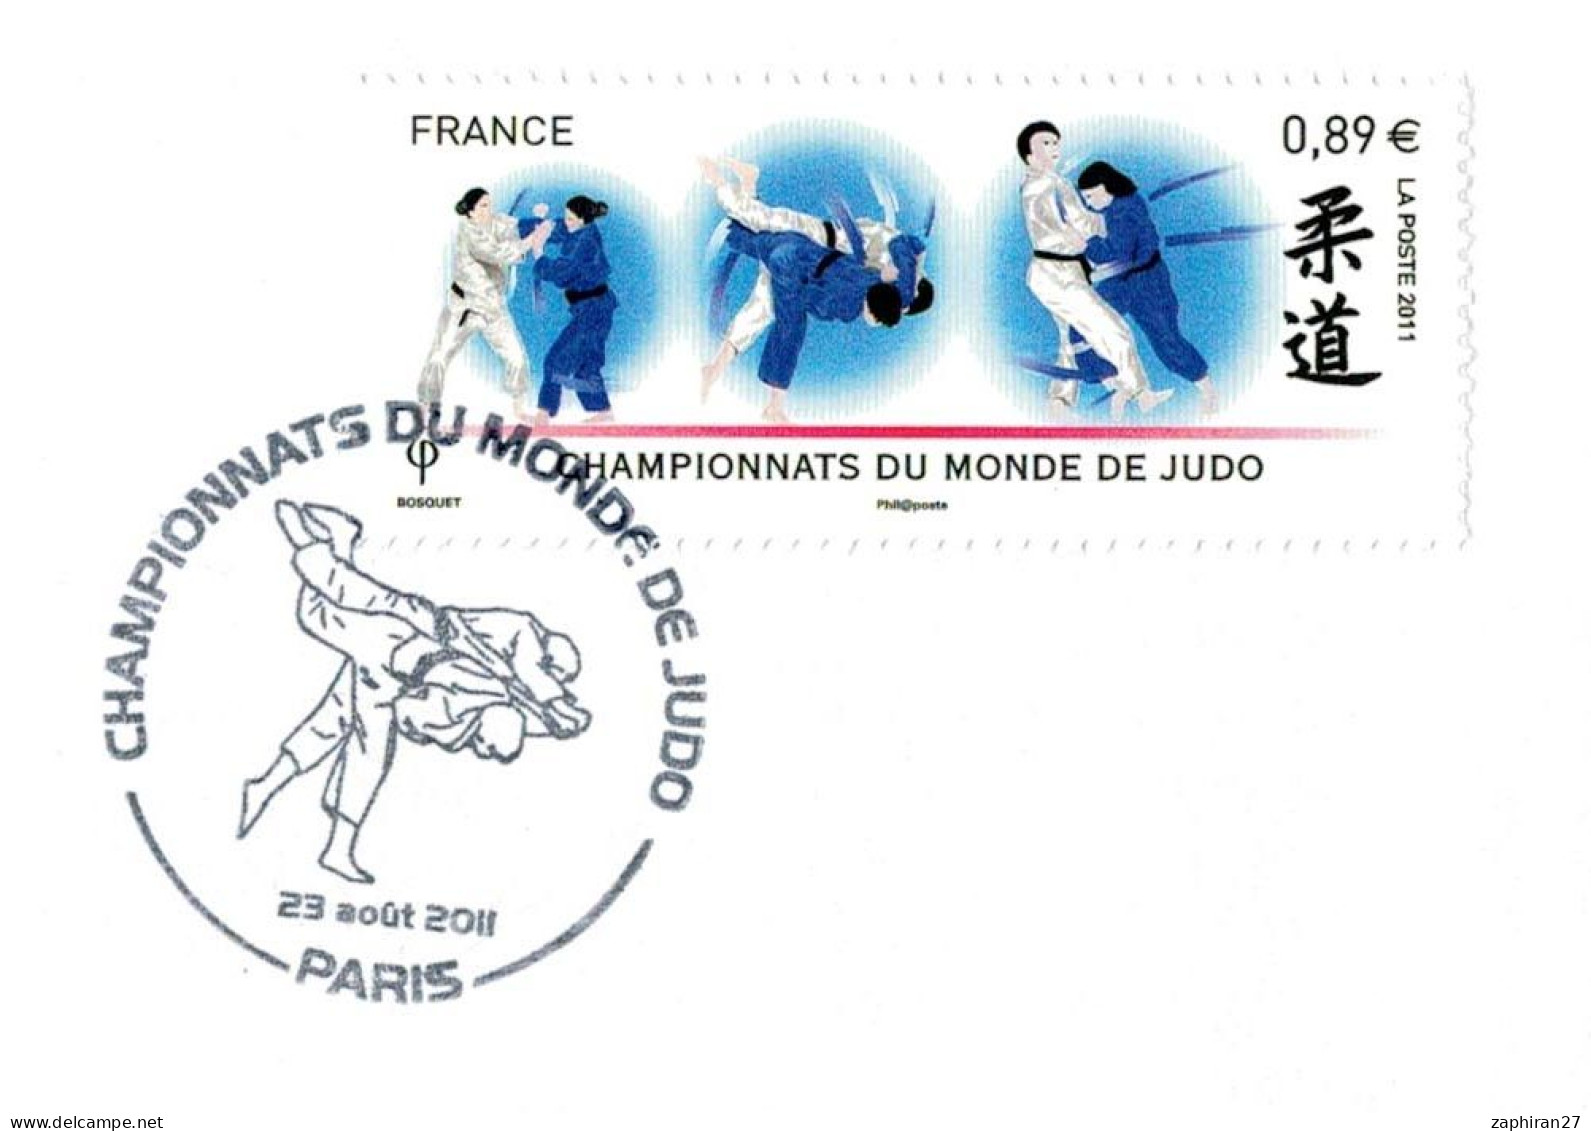 PARIS CHAMPIONNATS DU MONDE DE JUDO (23-8-2011) #455# - Judo